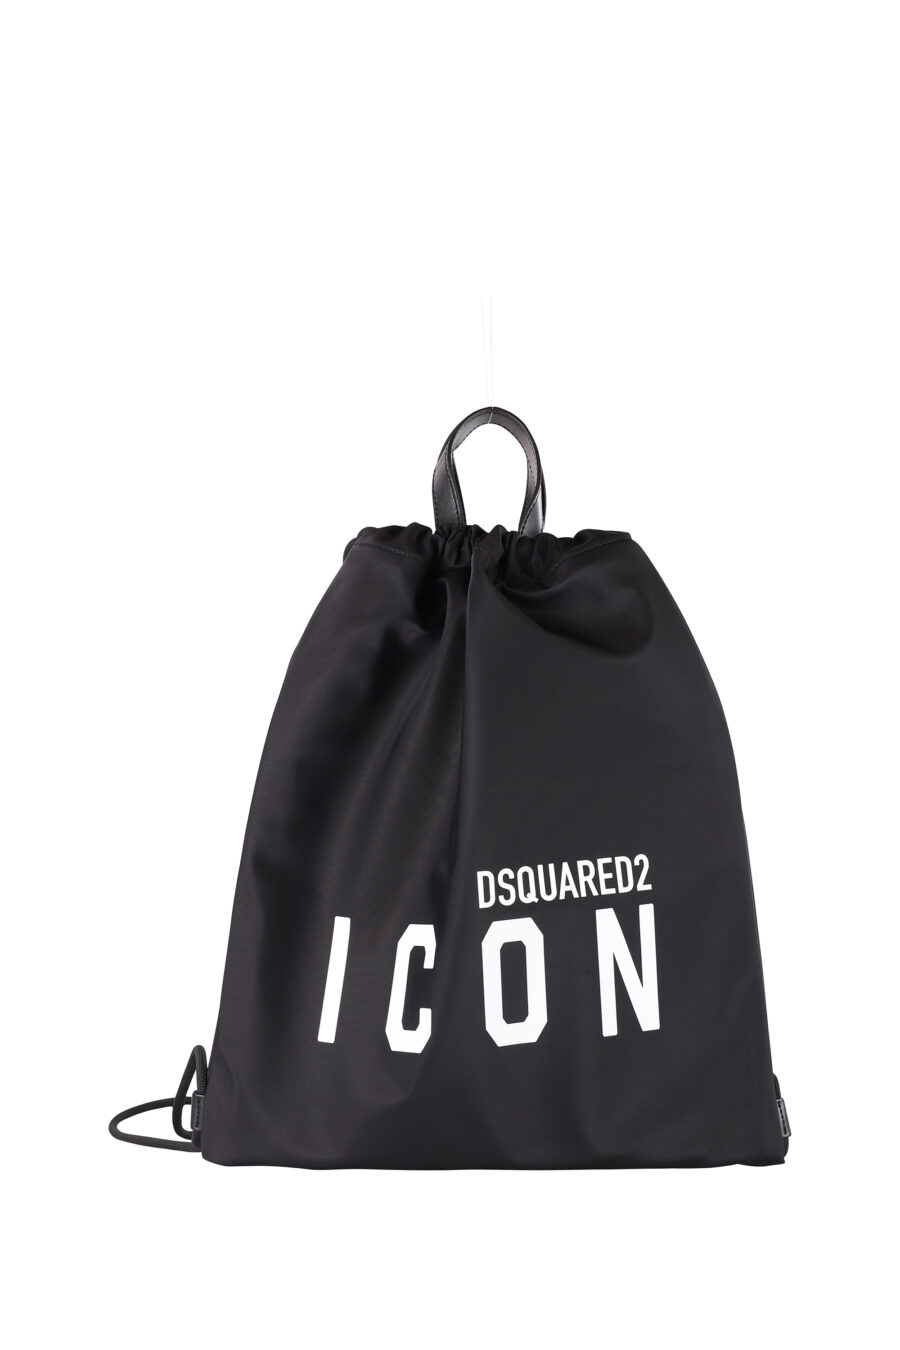 Black drawstring backpack with "icon" logo - IMG 1336